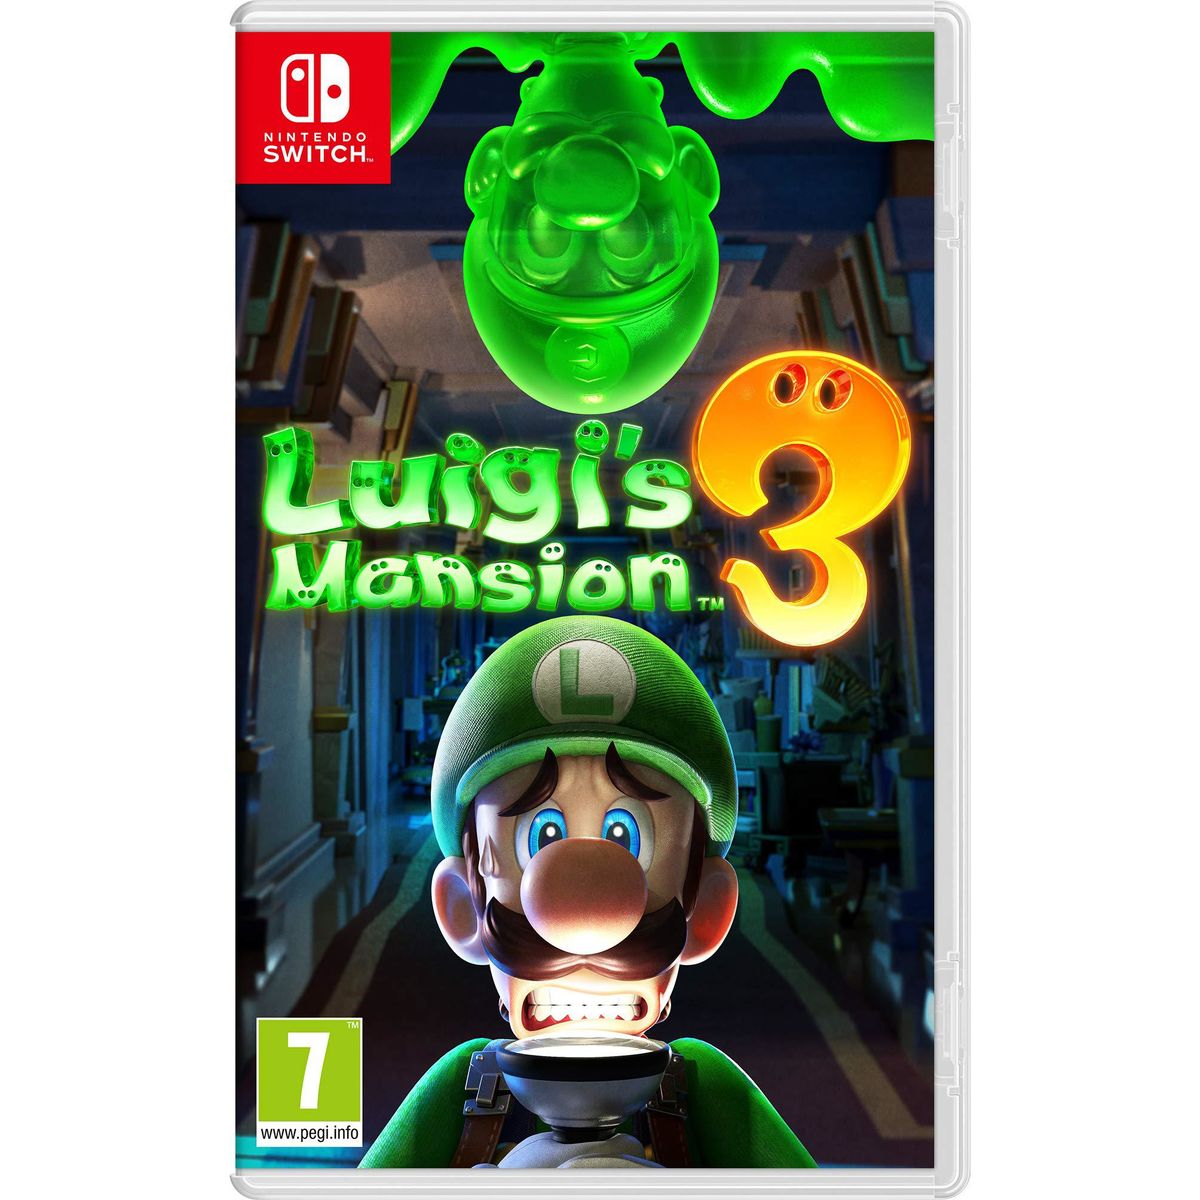 Nintendo Switch - Luigi's mansion 3 (FR)